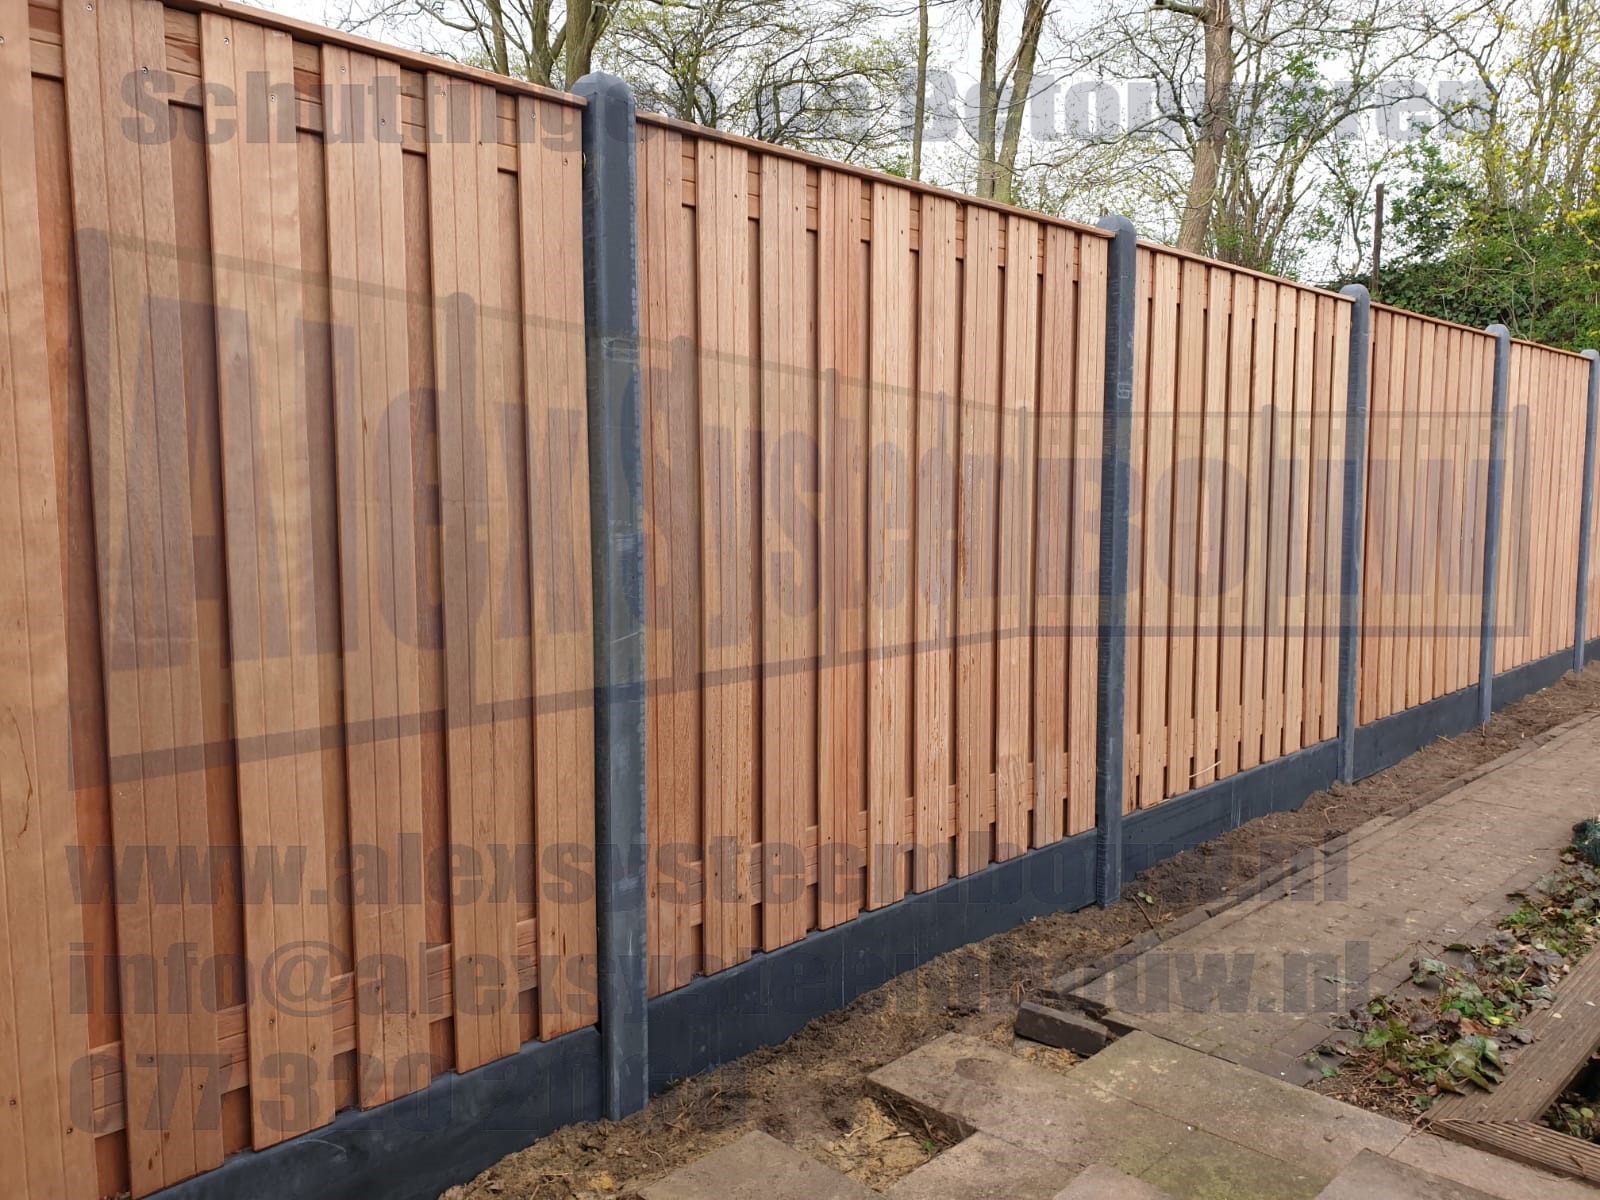 Schutting-hardhout-duurzaam-21-planks-hout-beton